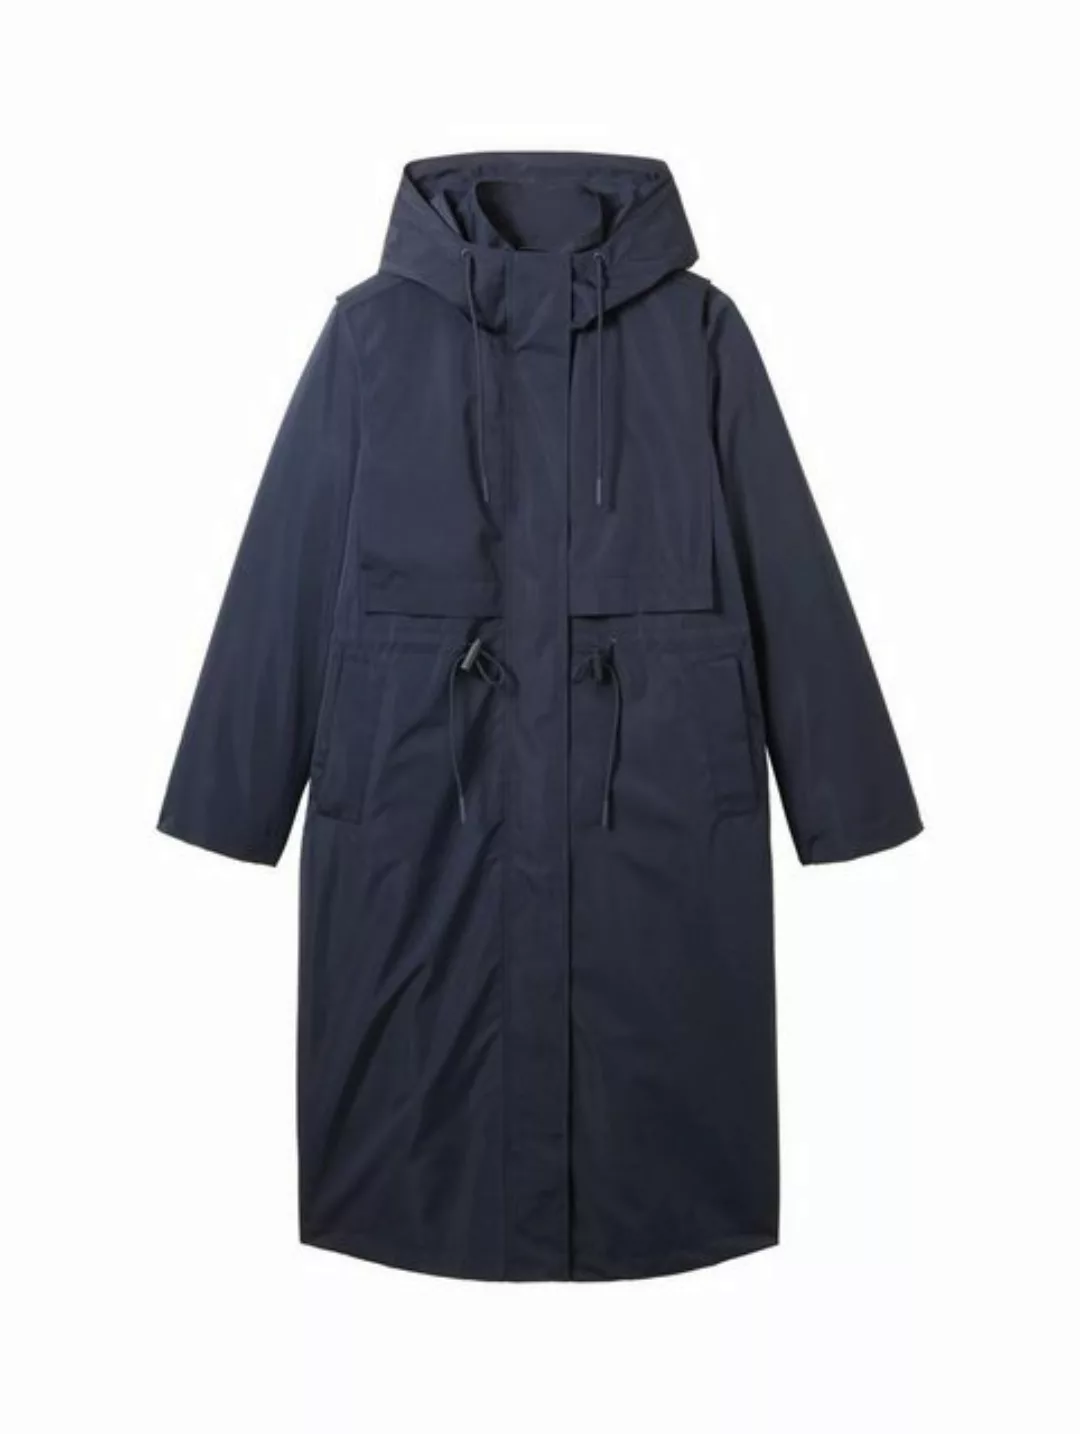 TOM TAILOR Outdoorjacke summer raincoat günstig online kaufen